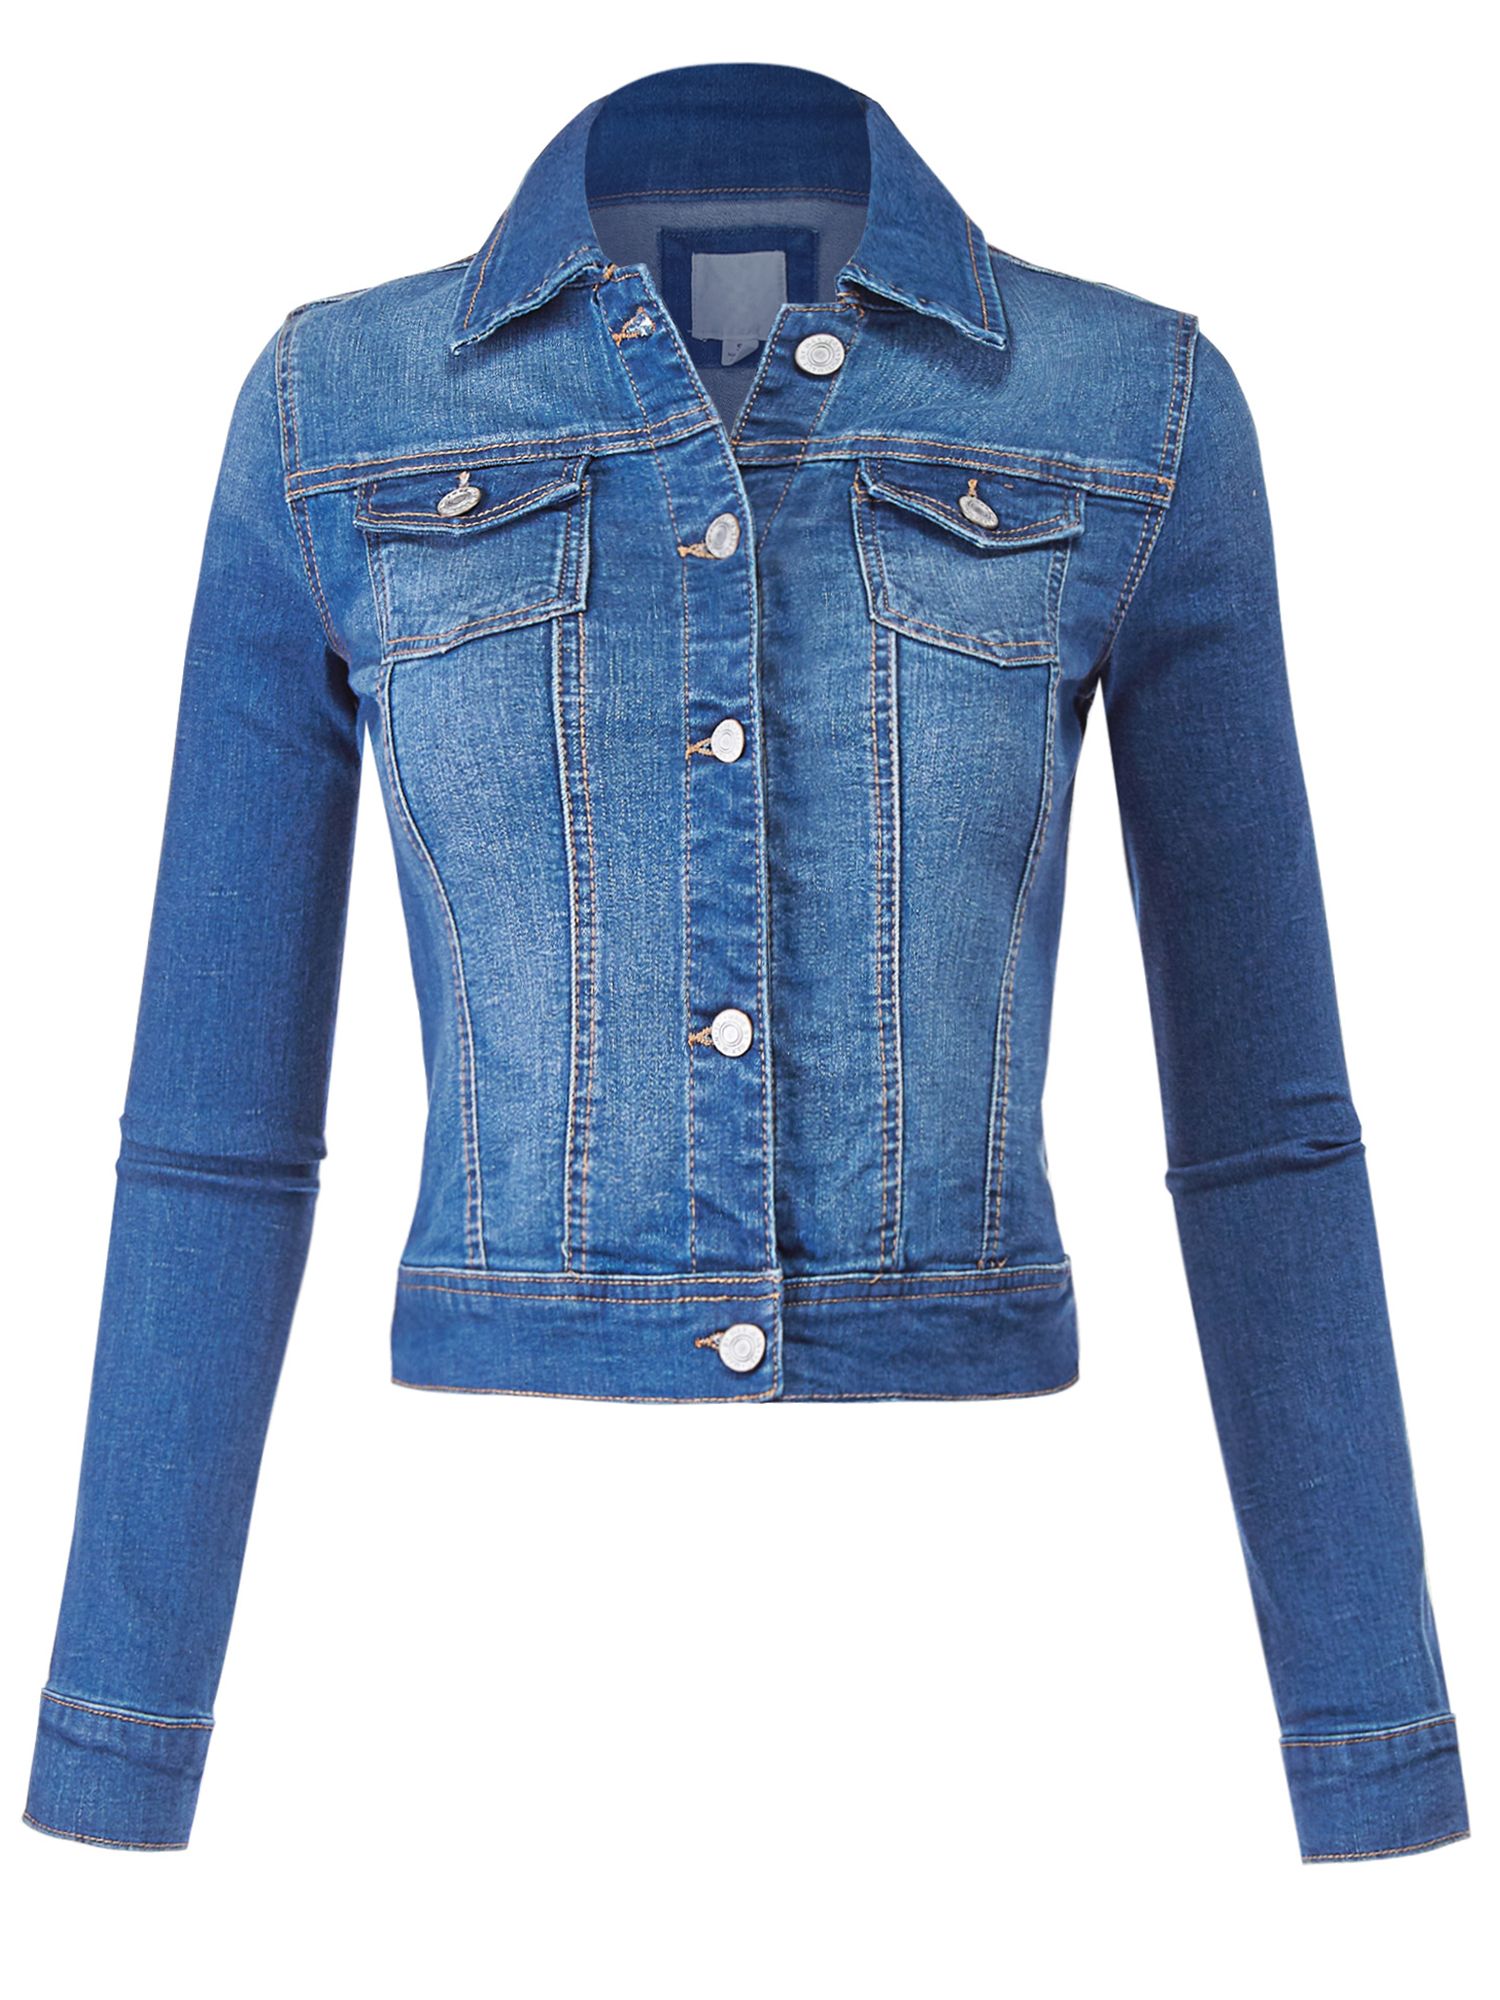 FashionMille Regular Slim Fit Washed Denim Women Jacket Jean Jacket - image 1 of 5